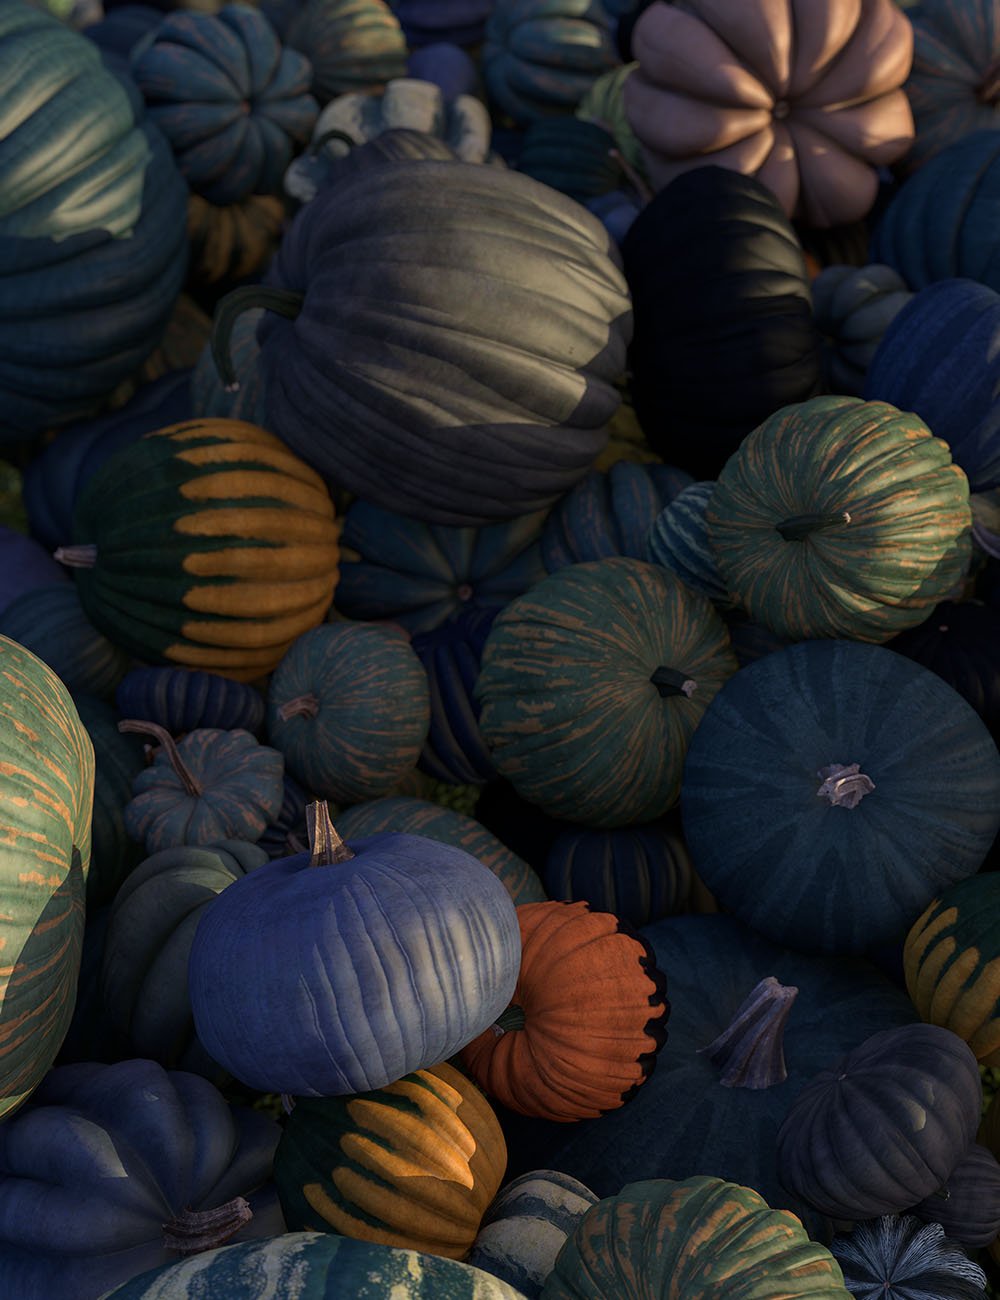 Epic Pumpkin Pack by: Orestes Graphics, 3D Models by Daz 3D